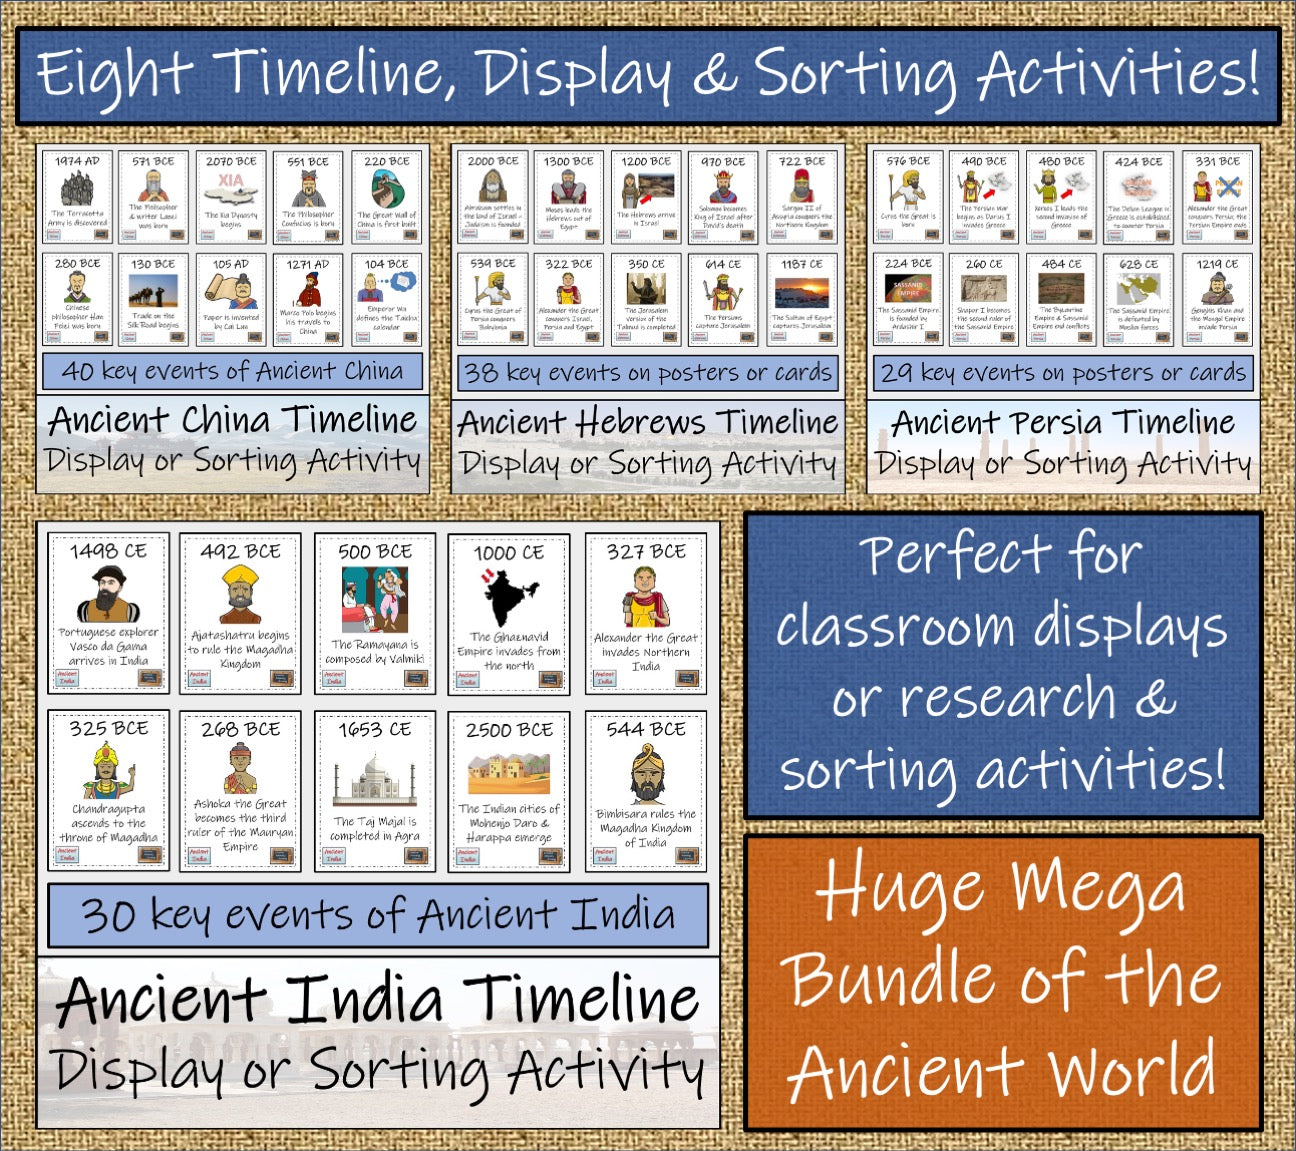 Ancient History Mega Bundles 1 & 2 | 5th & 6th Grade | 160 hours of Activities